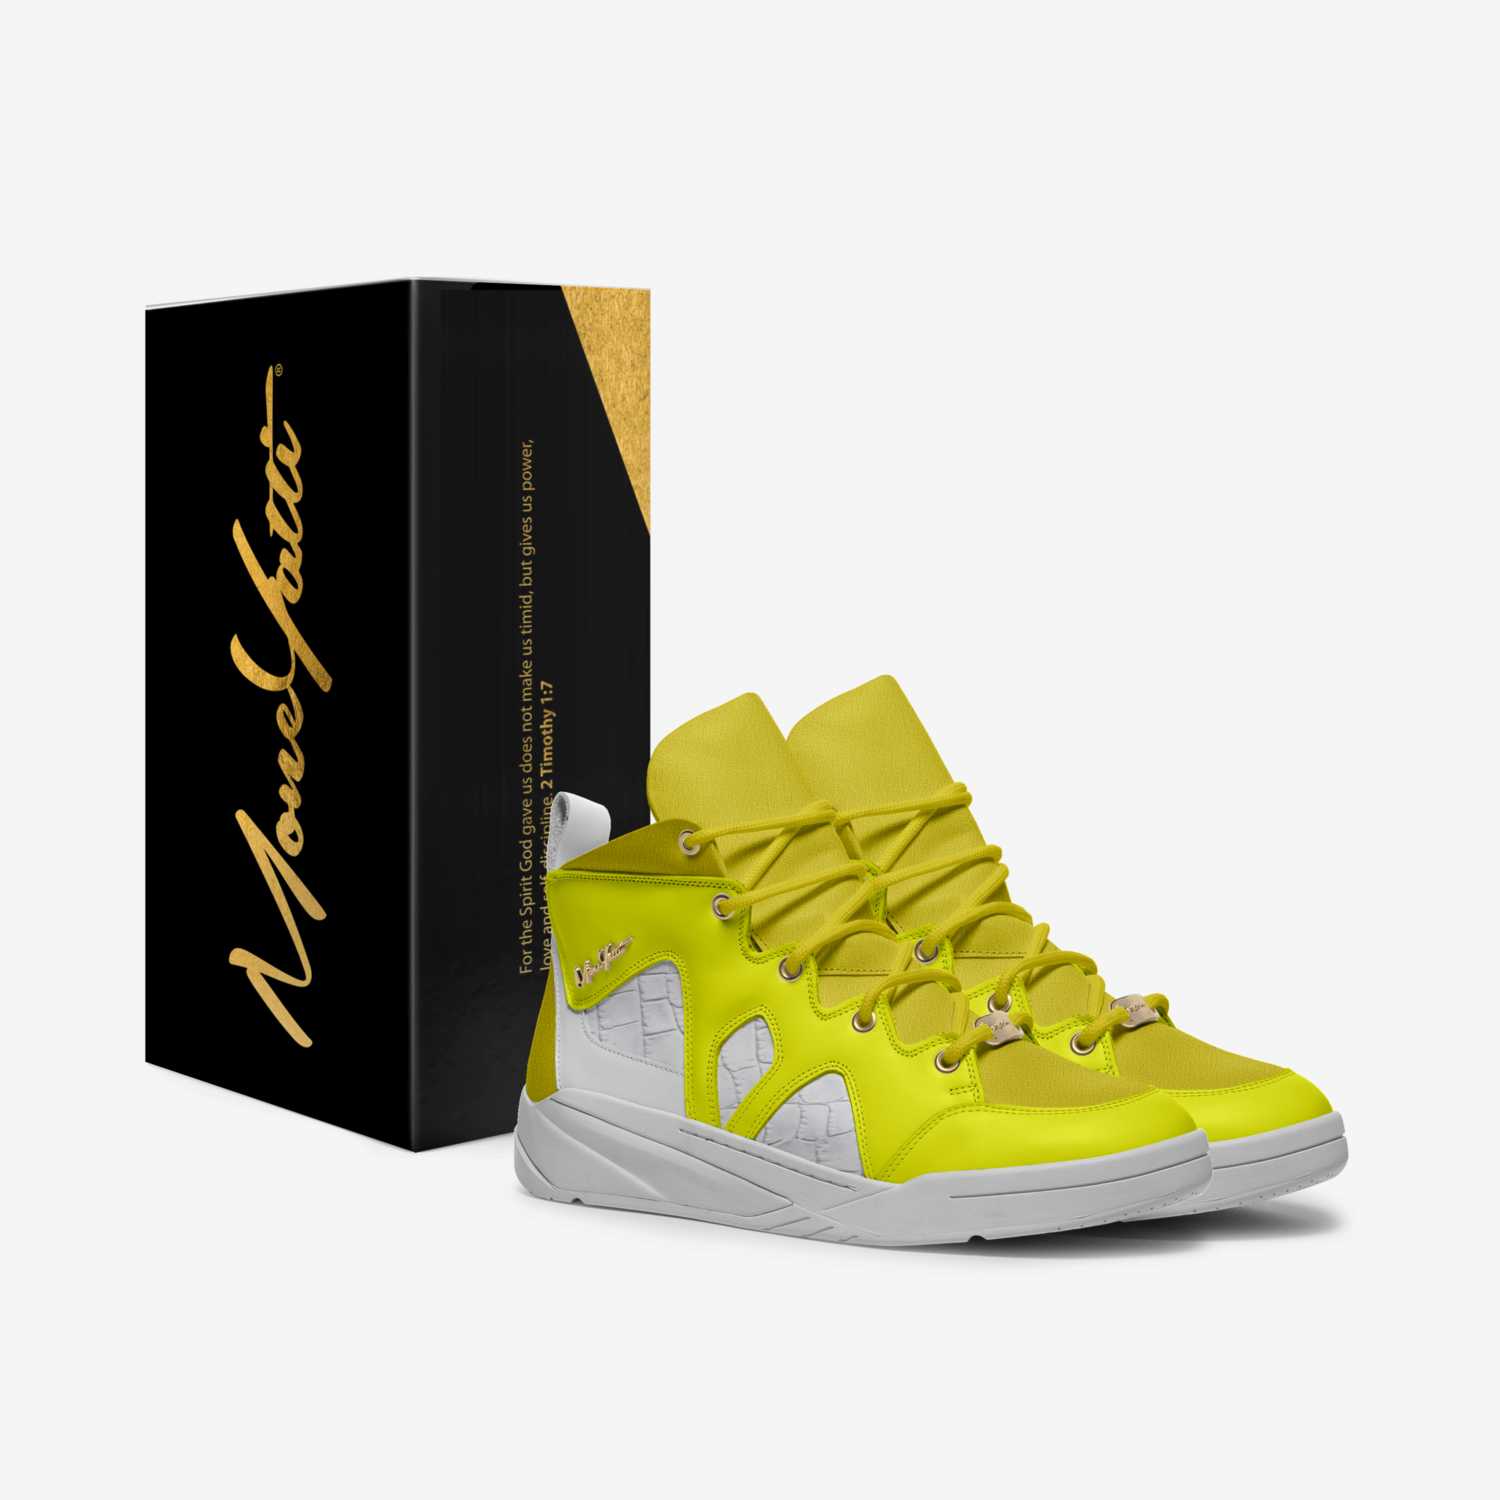 MONEYATTI TAKE OFF 017 custom made in Italy shoes by Moneyatti Brand | Box view